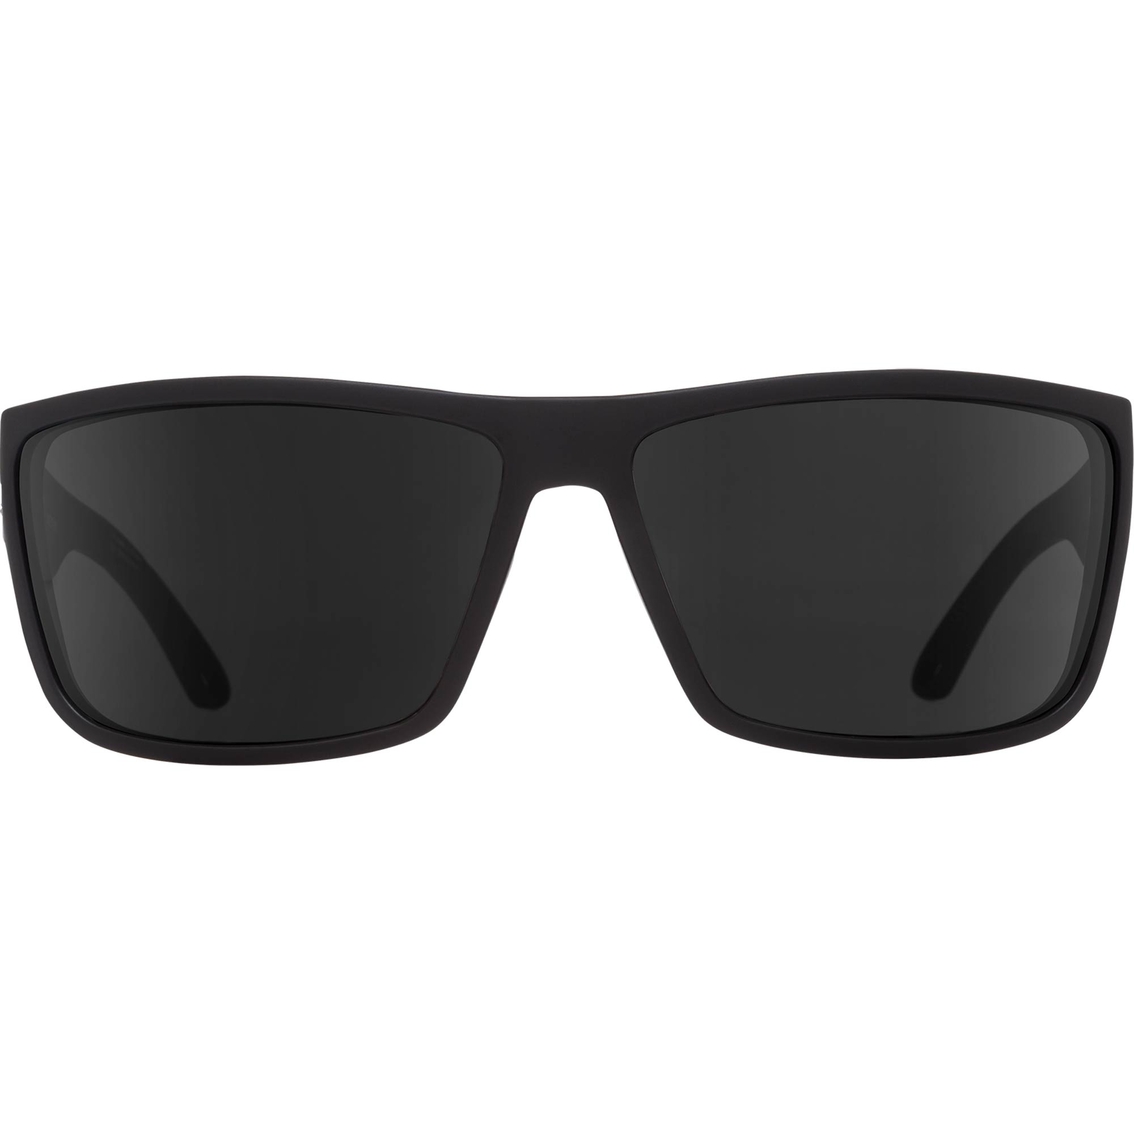 Spy Optic Rocky Standard Issue Sunglasses 6800000000107 - Image 2 of 5